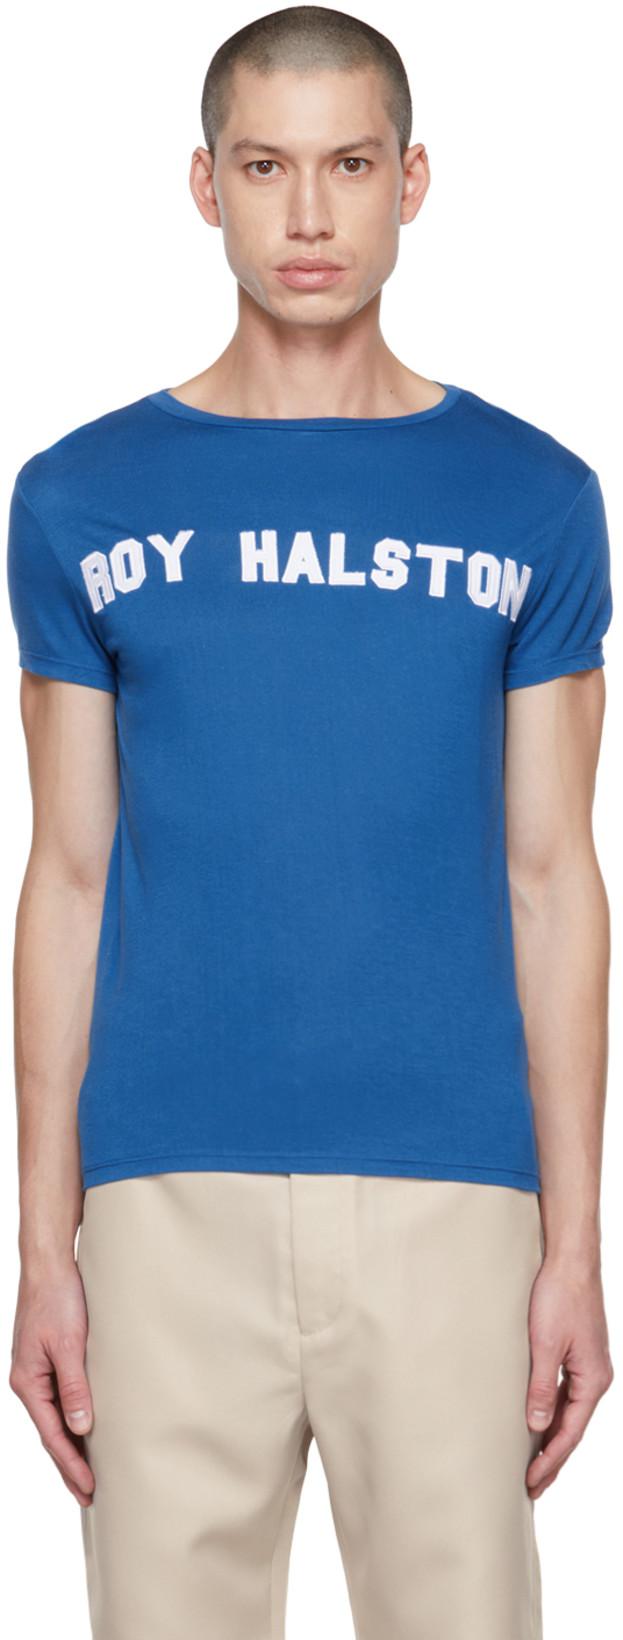 Blue Roy Halston T-Shirt by ALLED-MARTINEZ